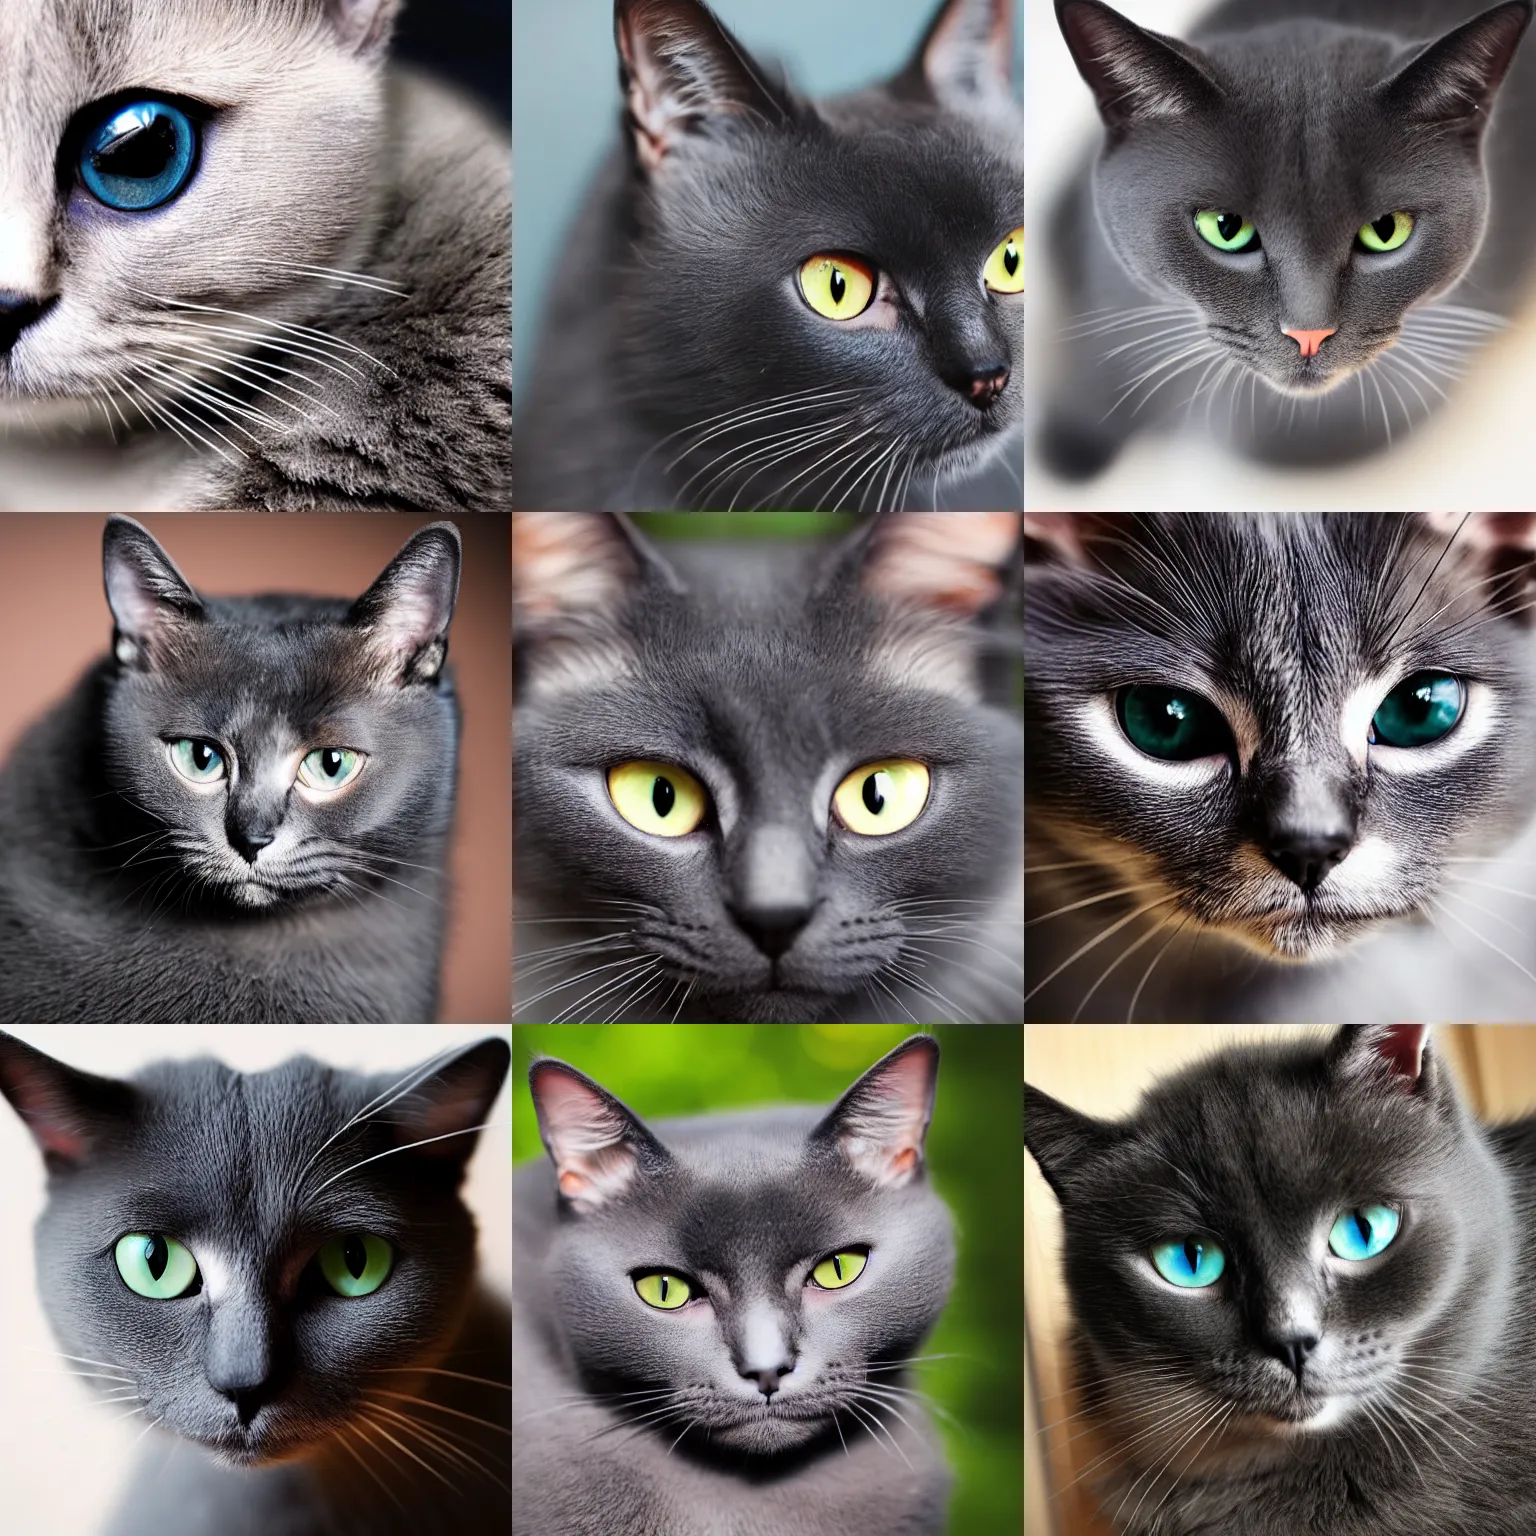 Prompt: dark grey cat with big black eyes